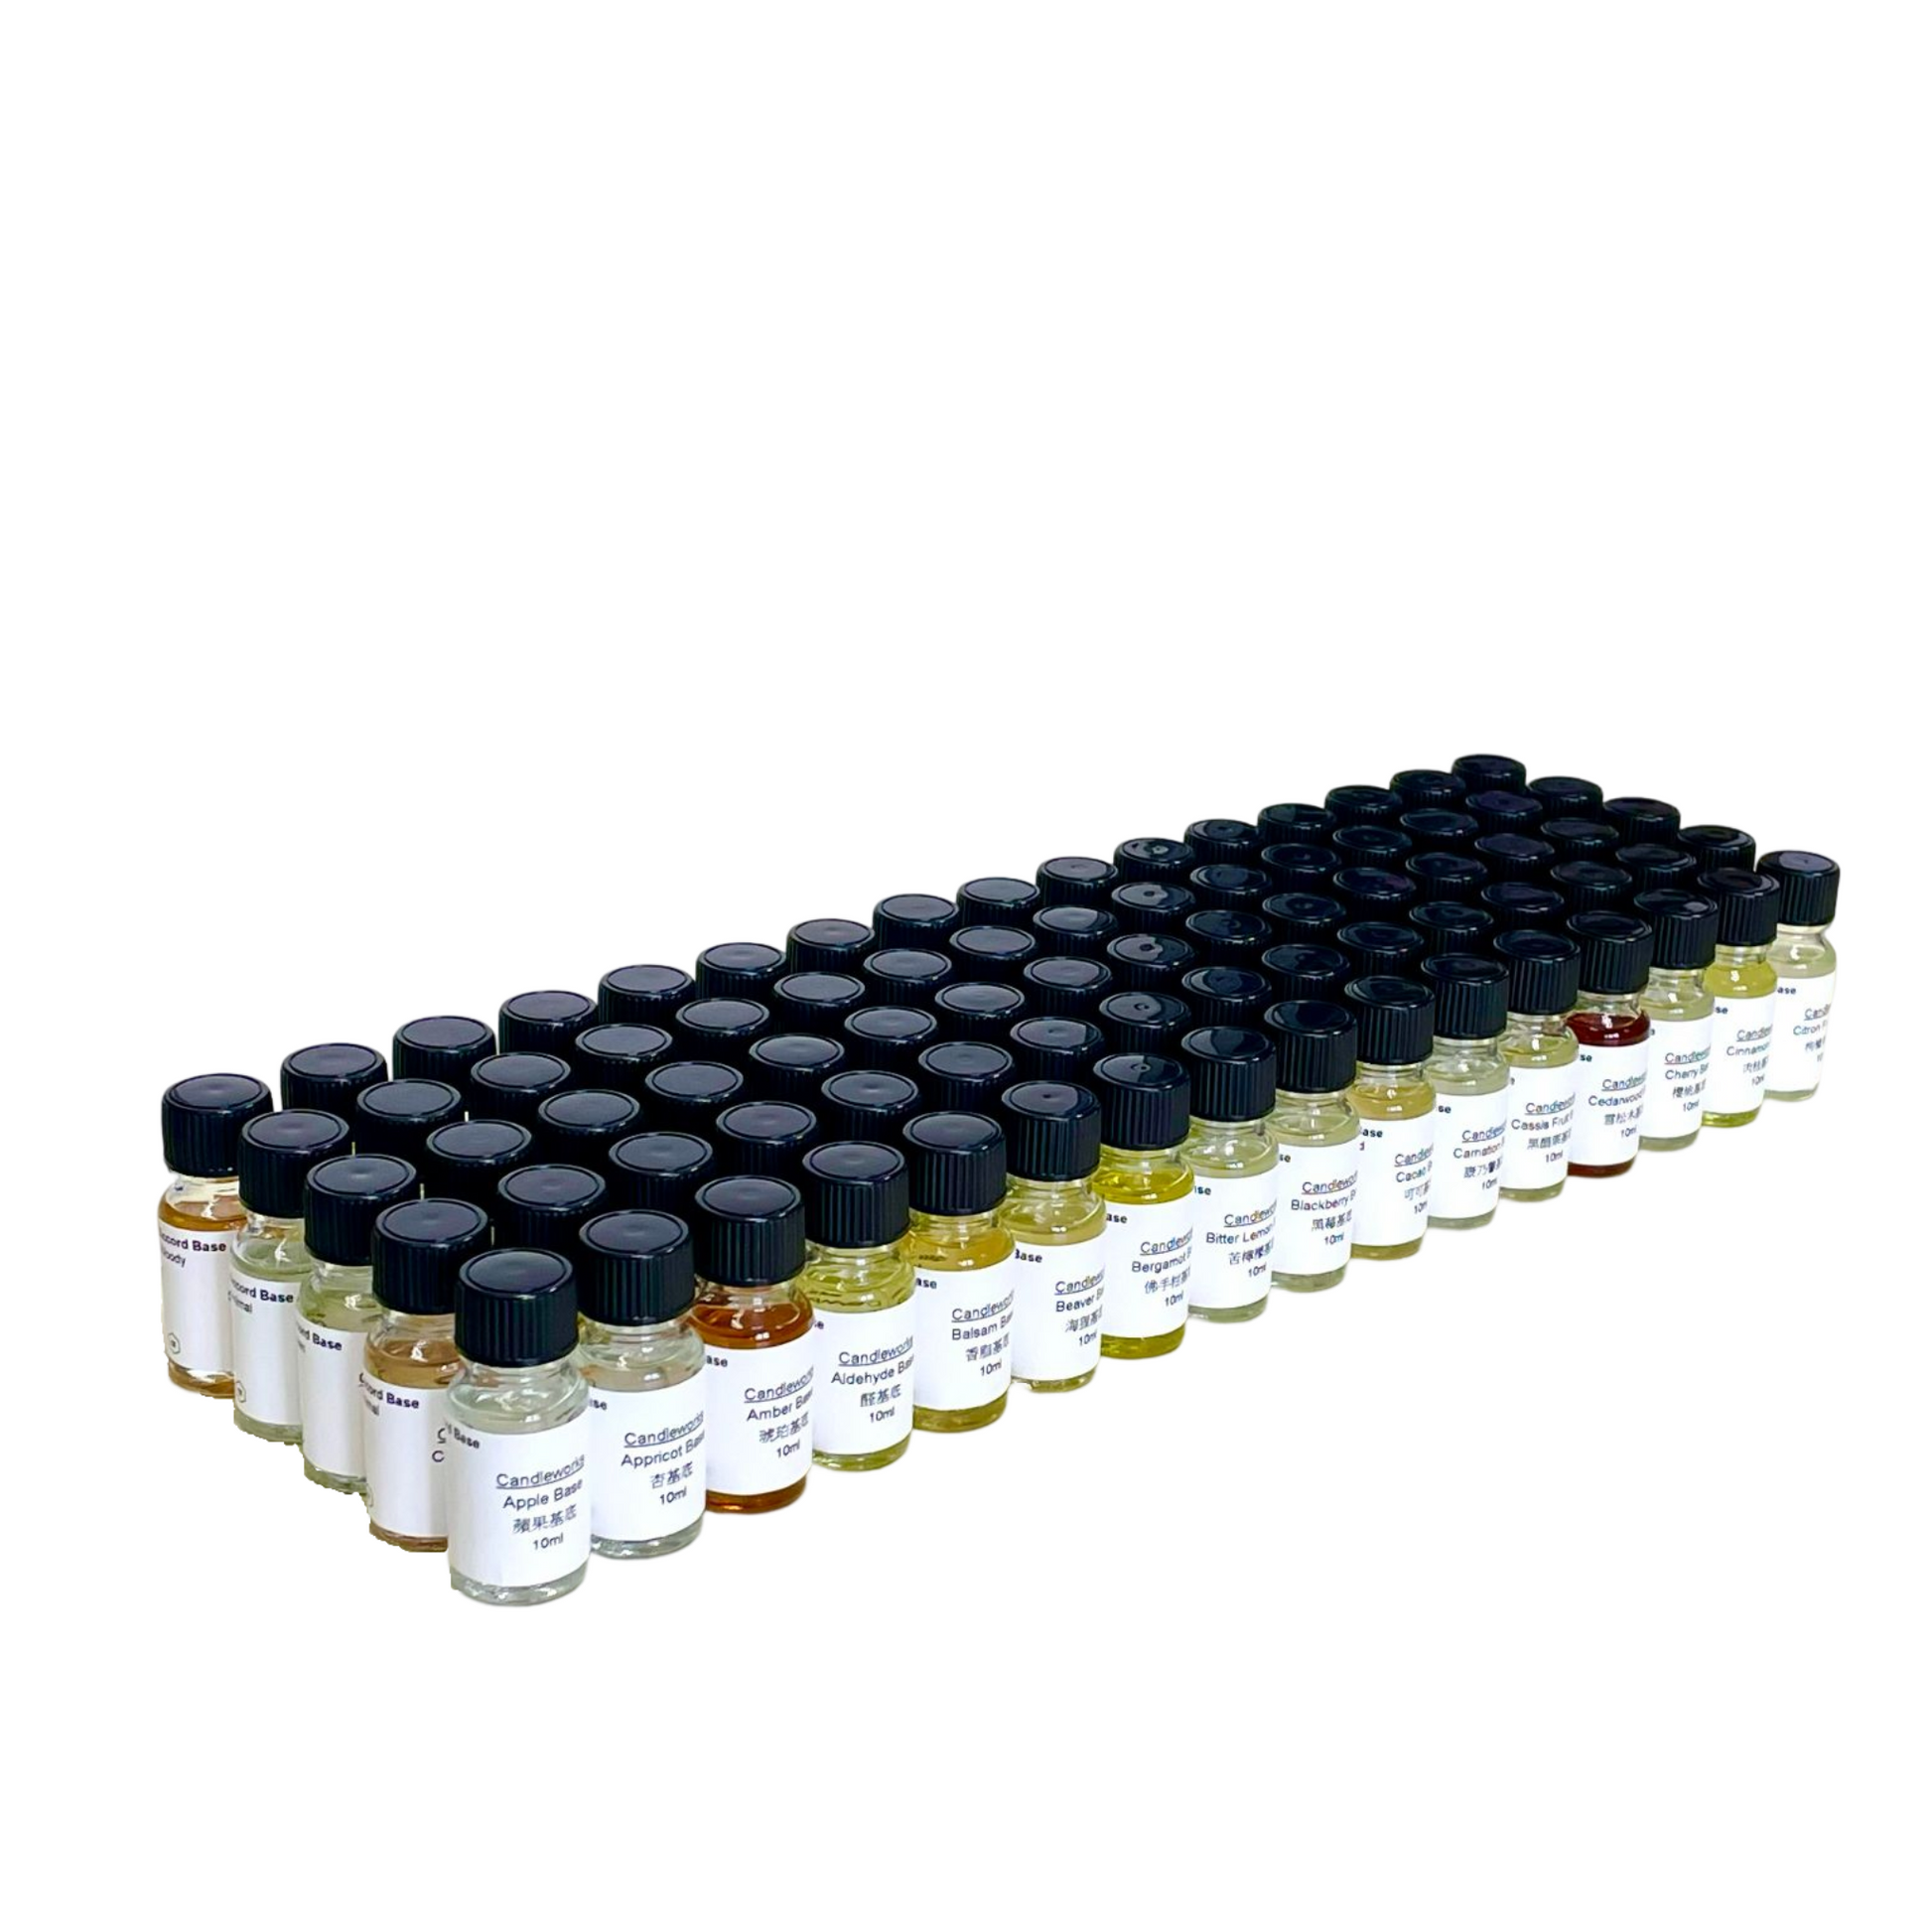 Perfume Base Blending Kit 調香基底油體驗套裝10ml x 80 Types